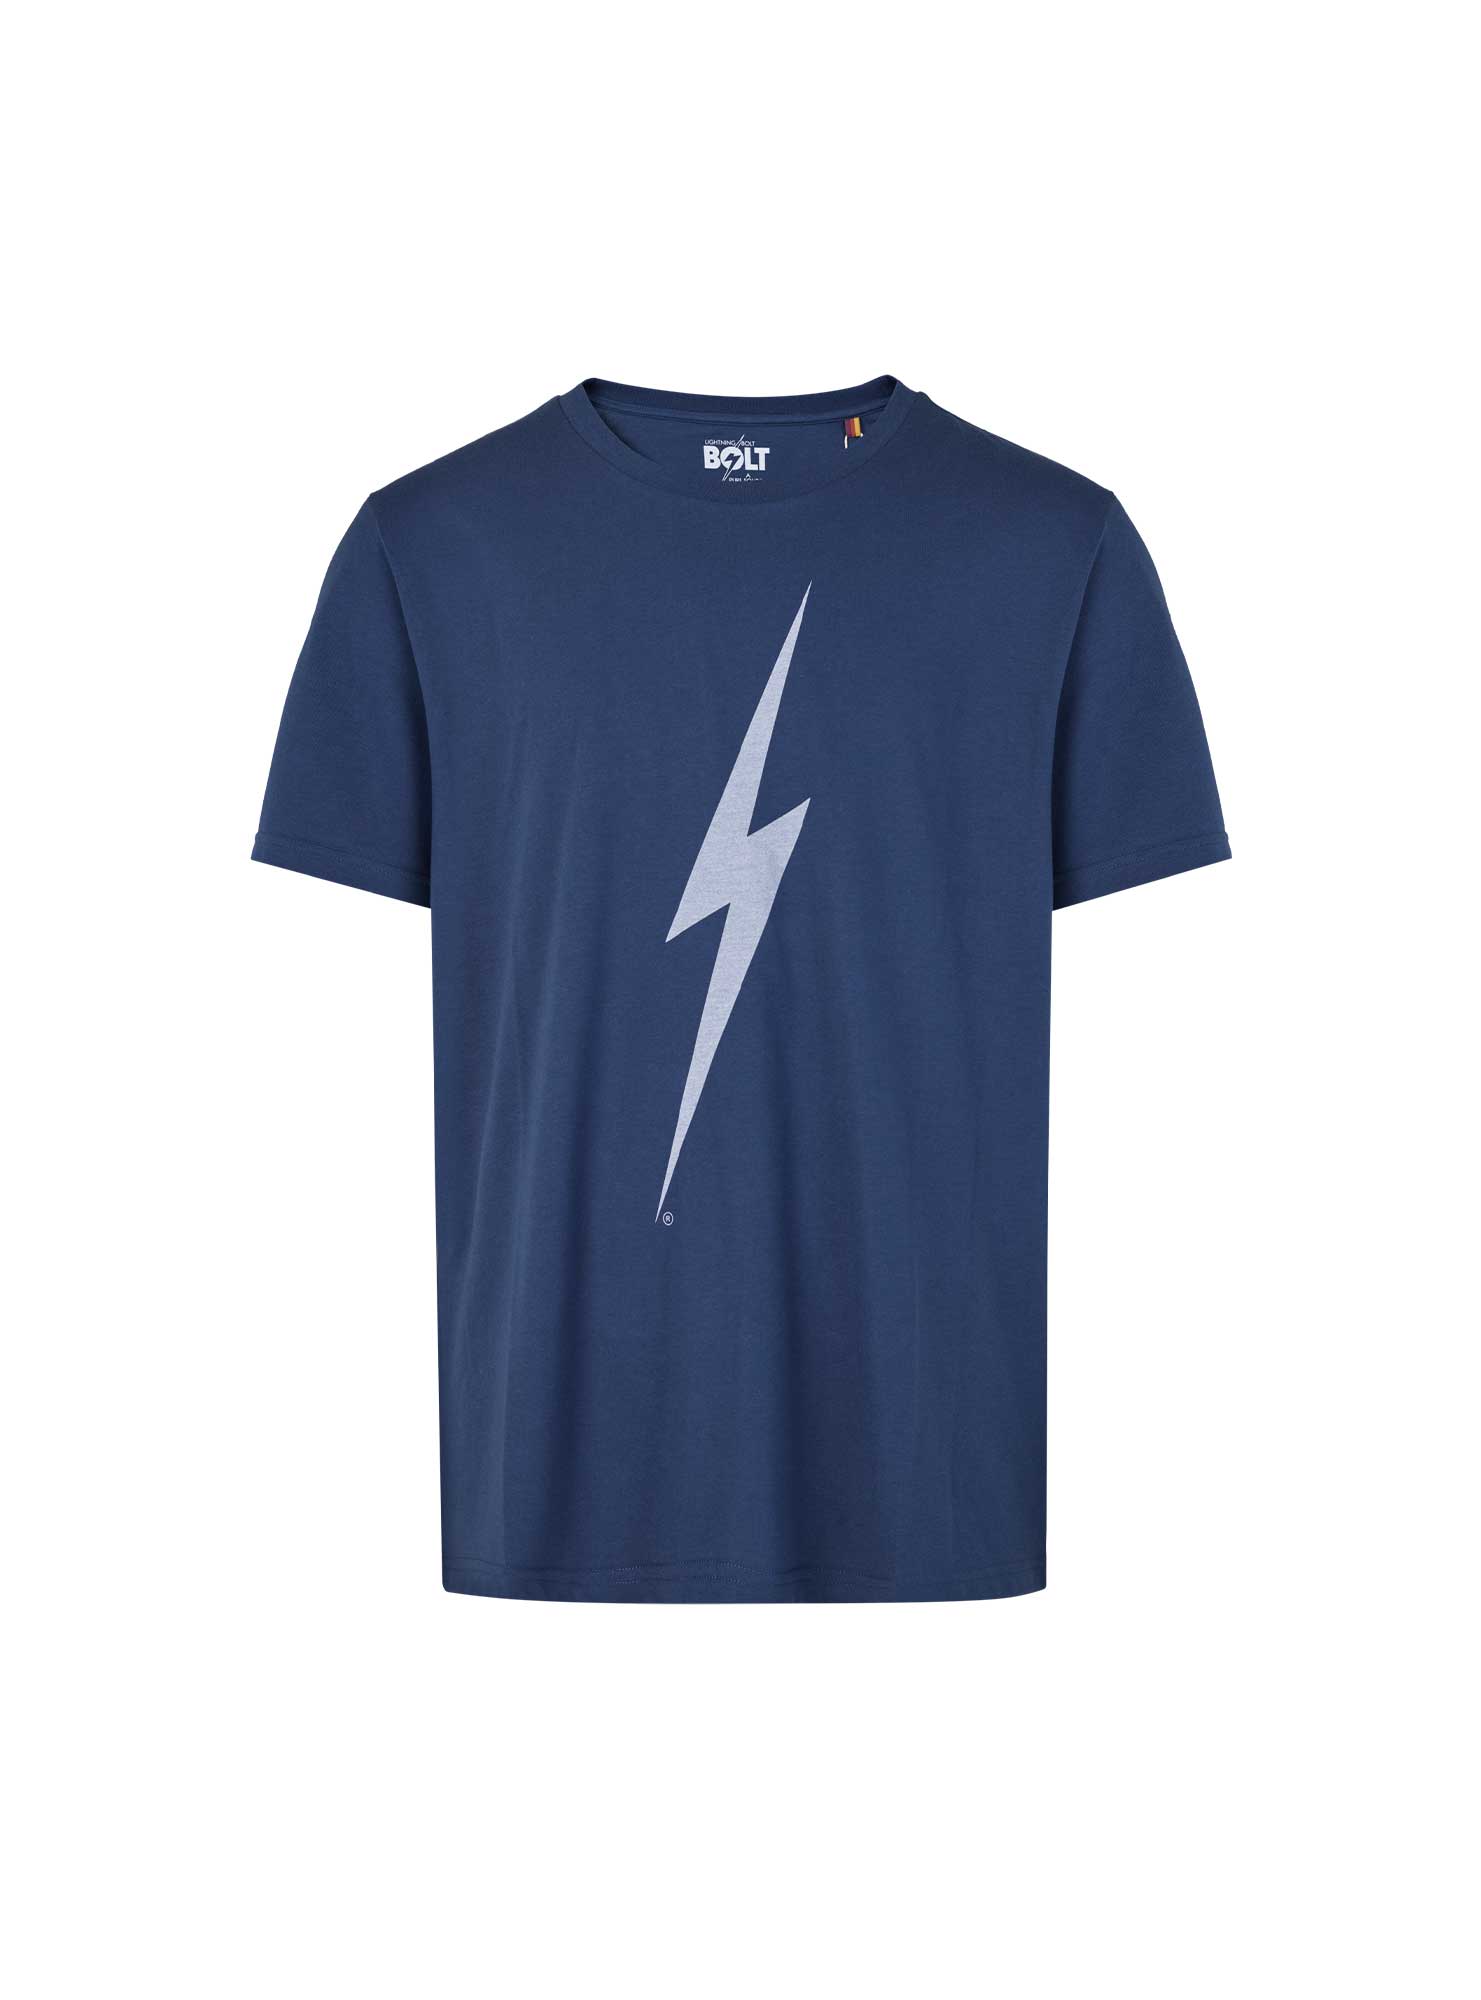 Camiseta De Manga Corta Lightning Bolt Forever Tee - Confort Y Calidad Portuguesa  MKP